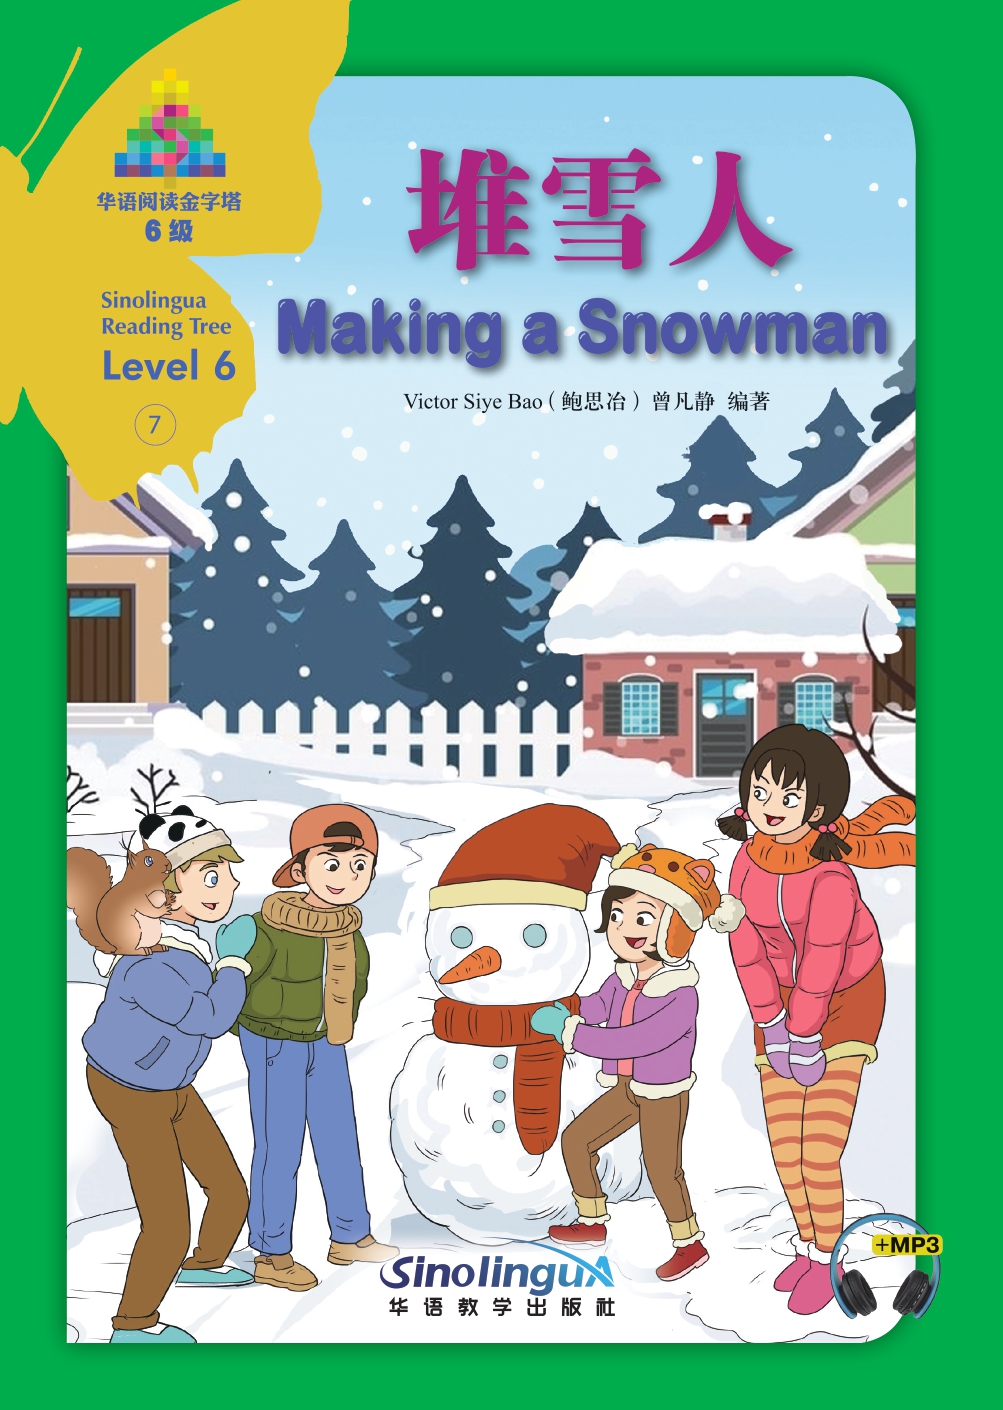 Sinolingua Reading Tree  Level 6 ⑦ Making a Snowman